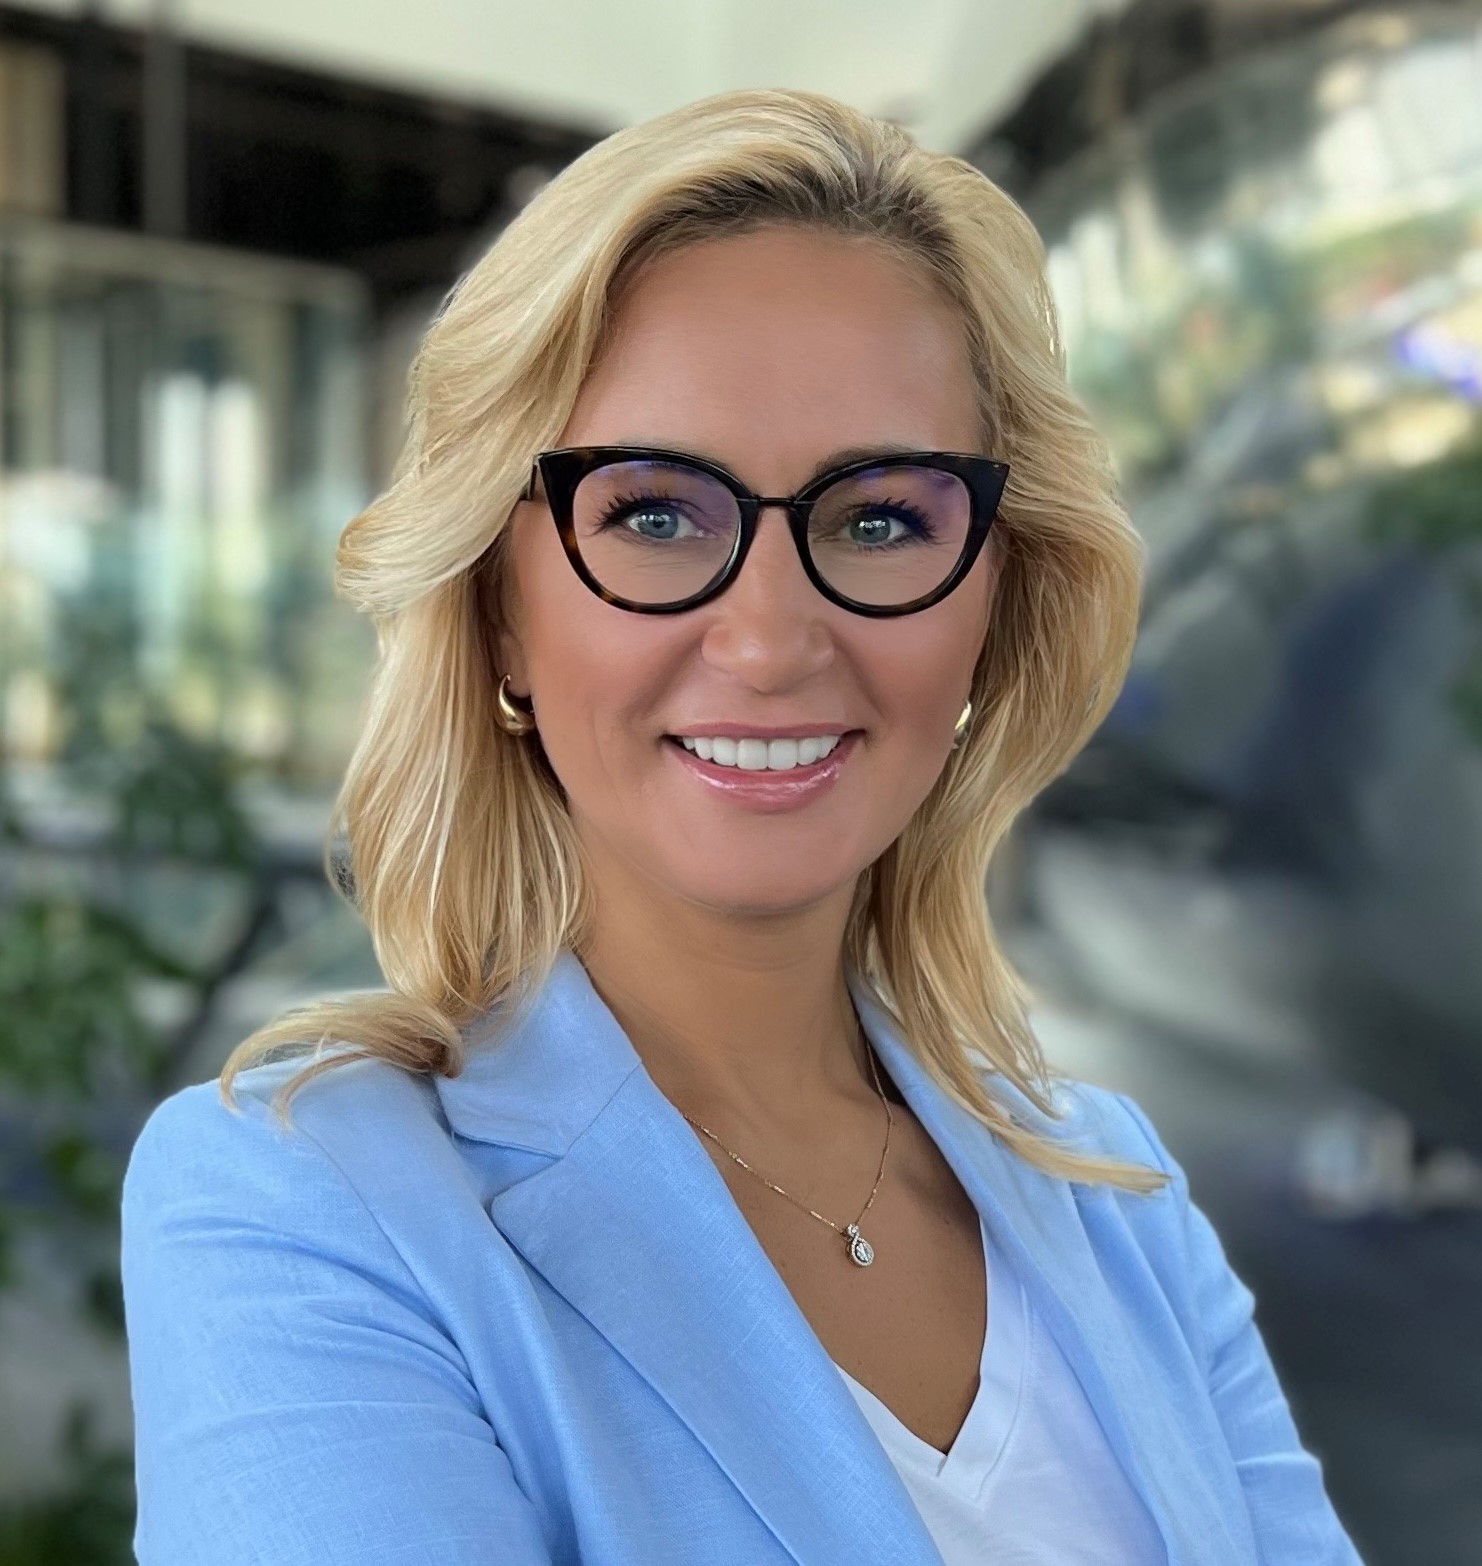 Sensus Aero Appoints Renata Sumskaite as New CEO